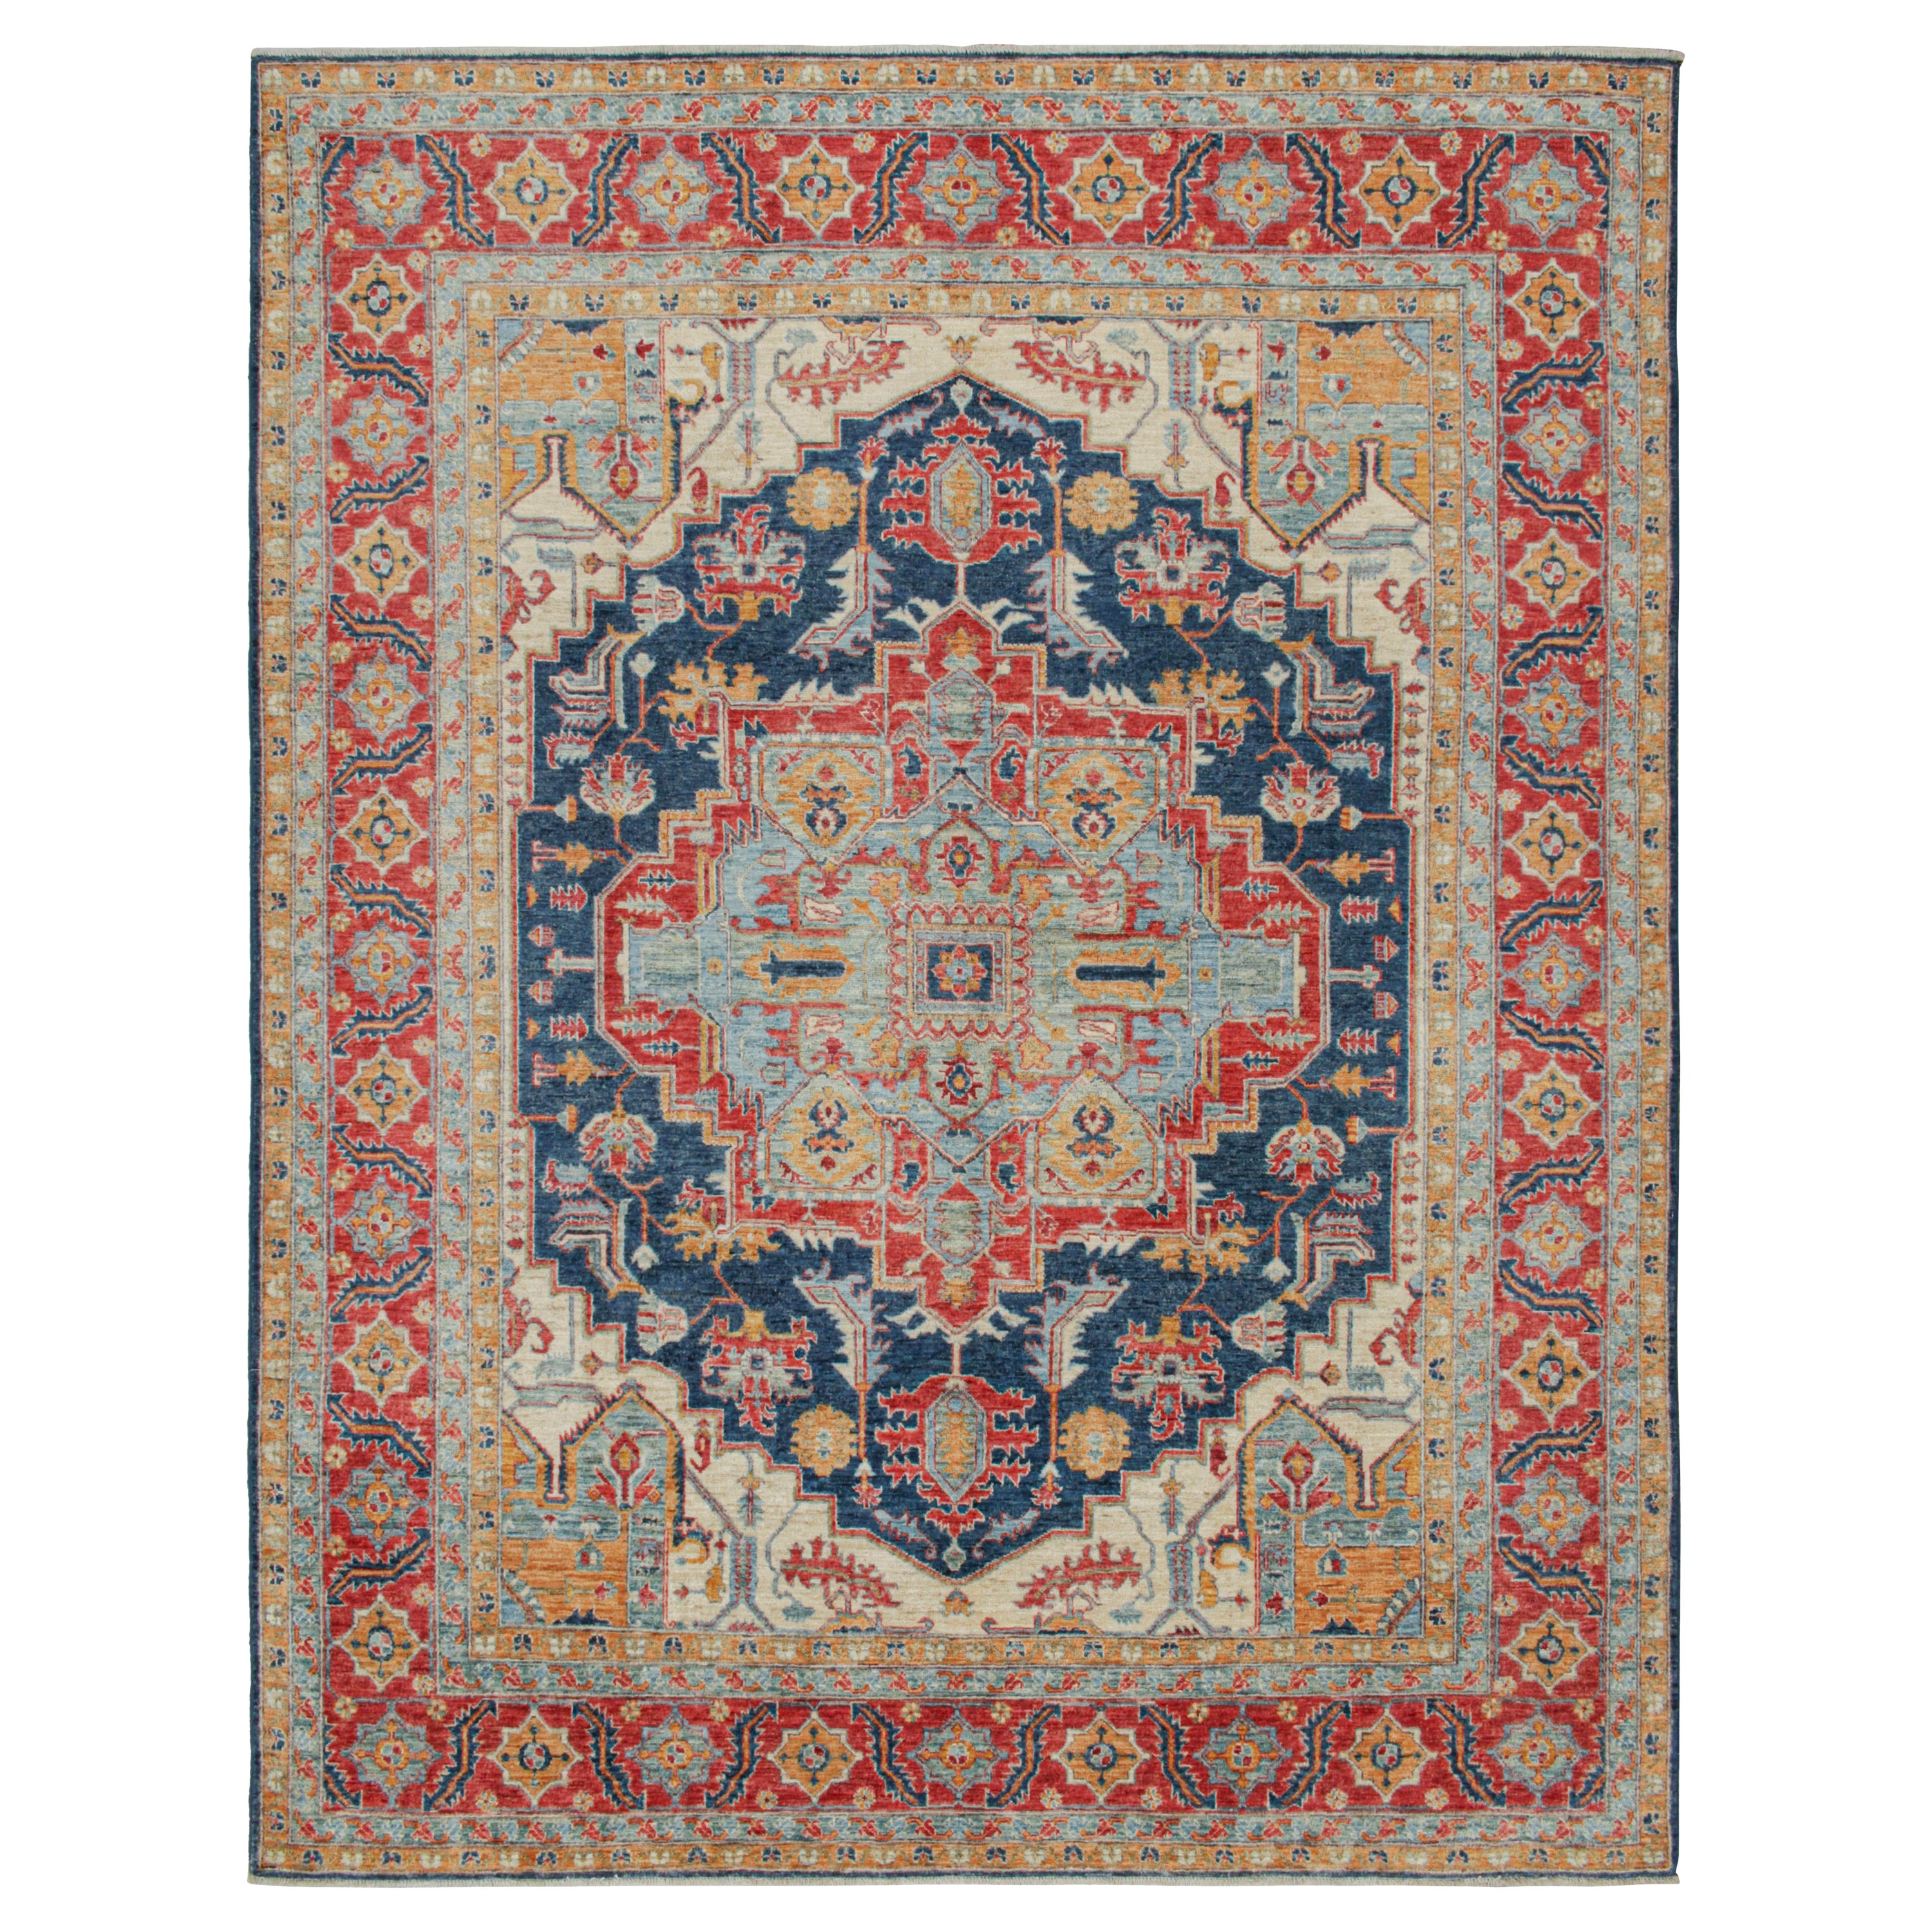 Rug & Kilim's Serapi Style Teppich in Rot, Blau und Gold mit Medaillon-Muster